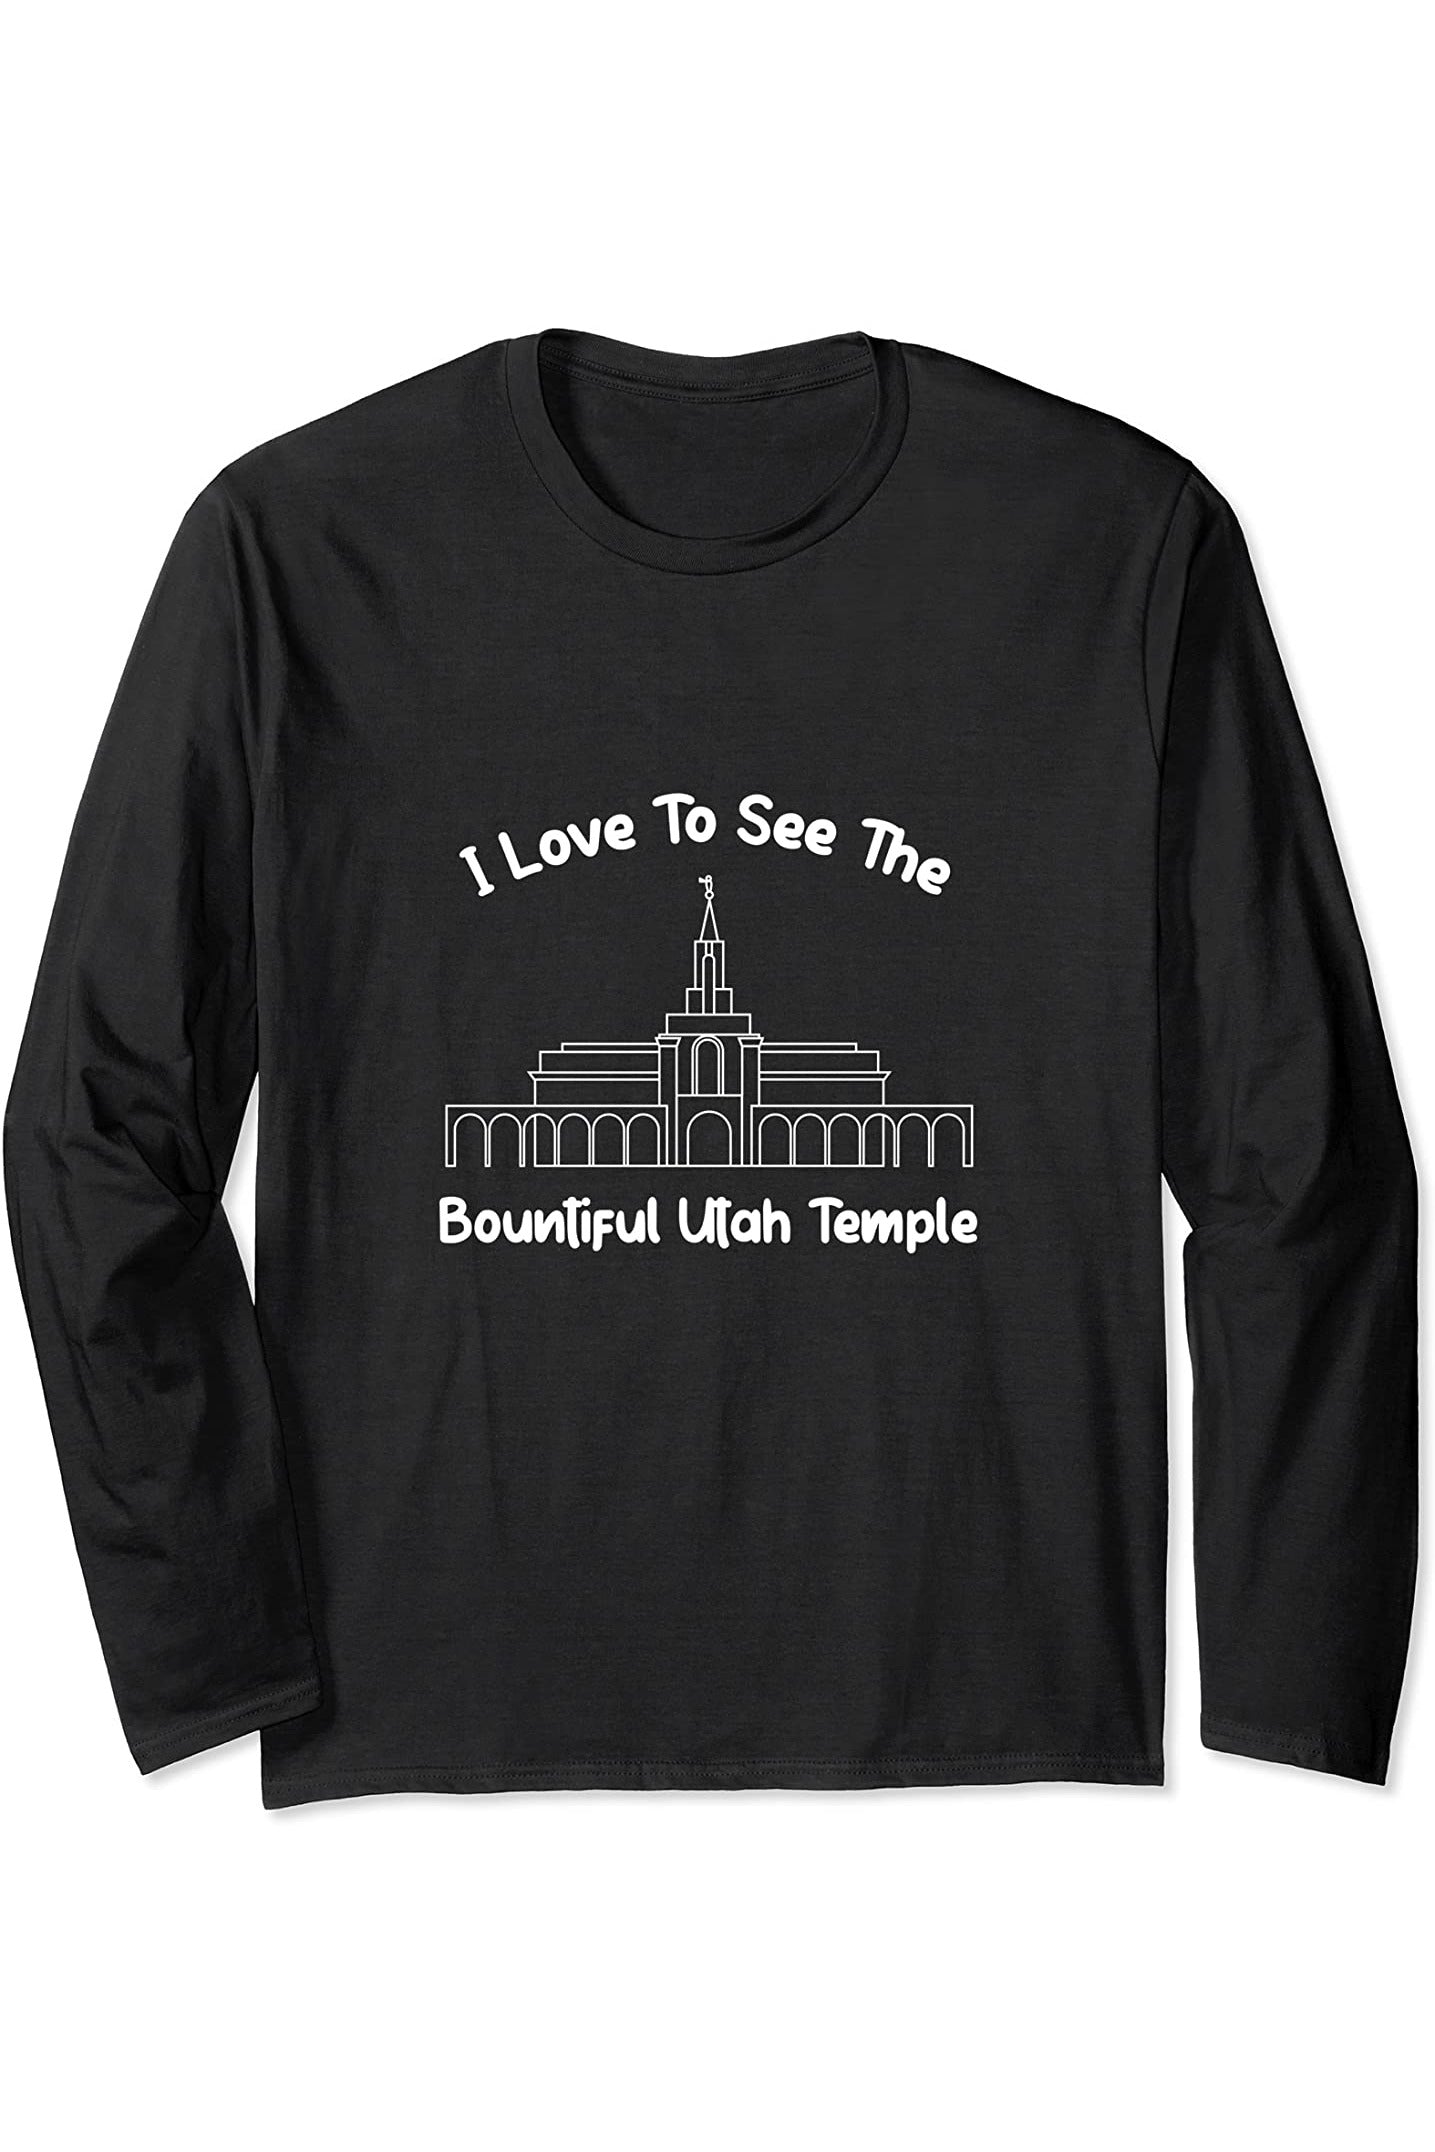 Bountiful Utah Temple Long Sleeve T-Shirt - Primary Style (English) US